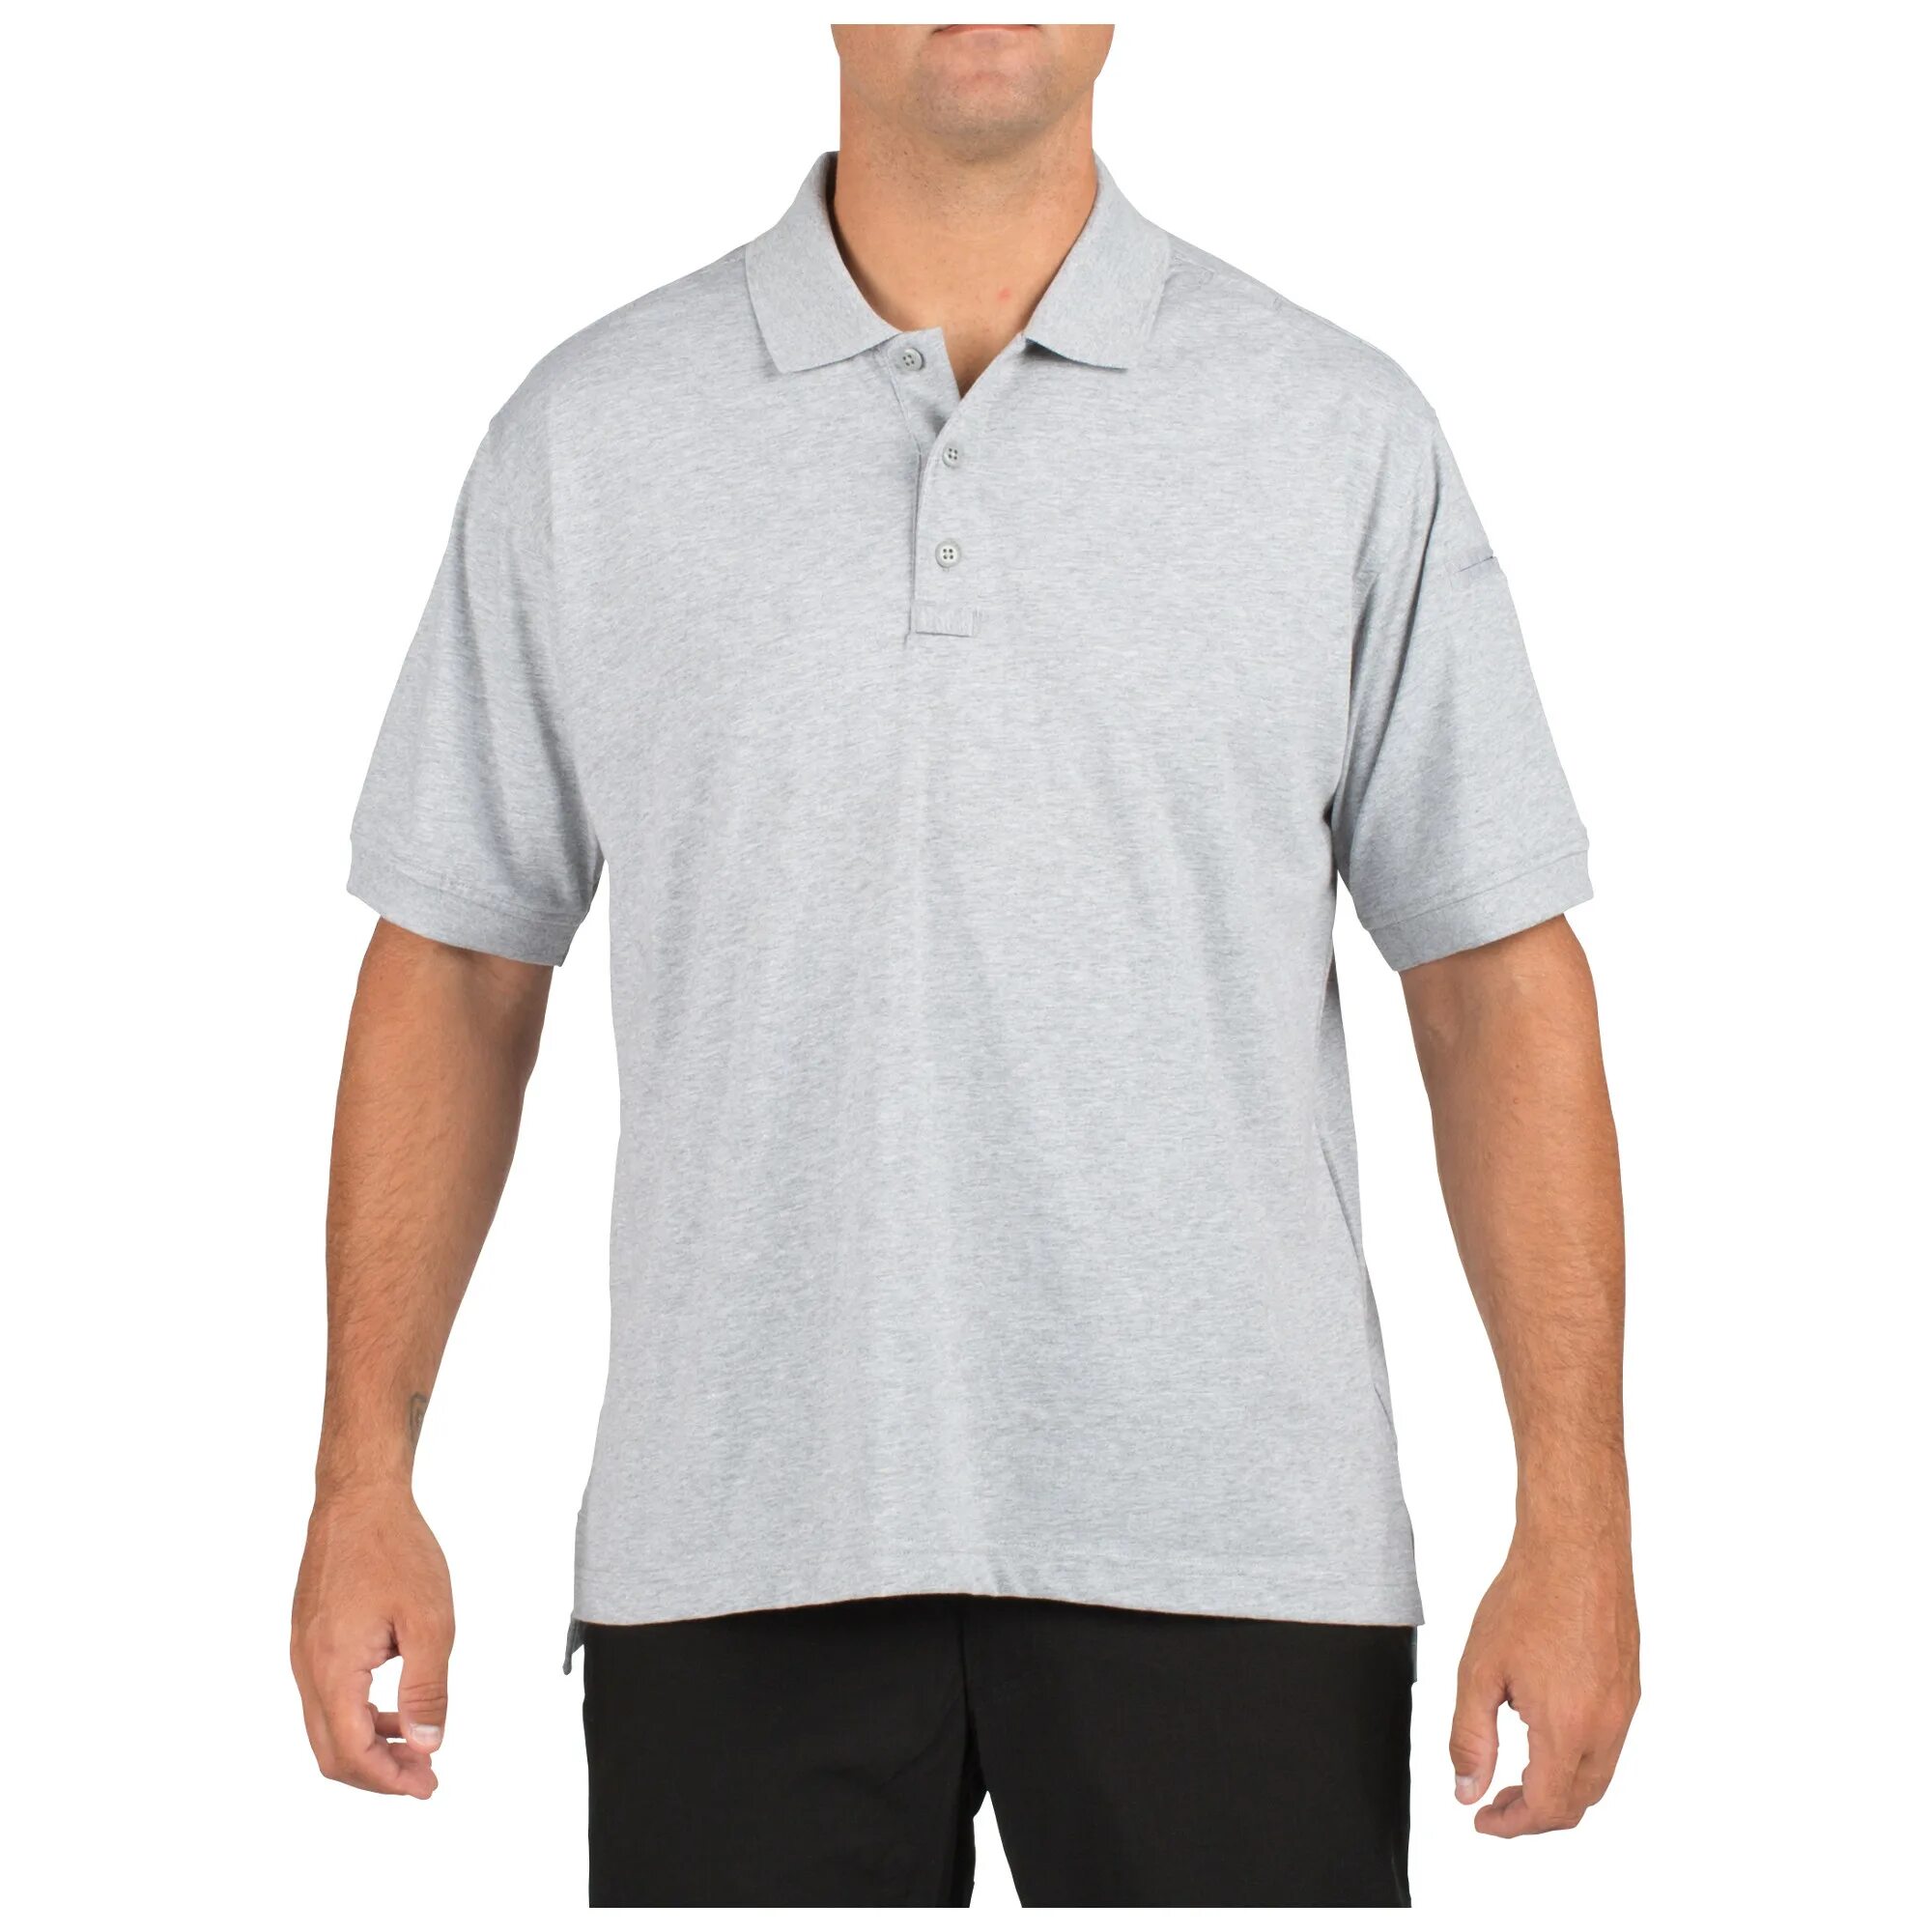 5.11 Tactical поло. 5.11 Helios поло. Поло 511. 5.11 Polo Side Pockets. Short sleeved shirt